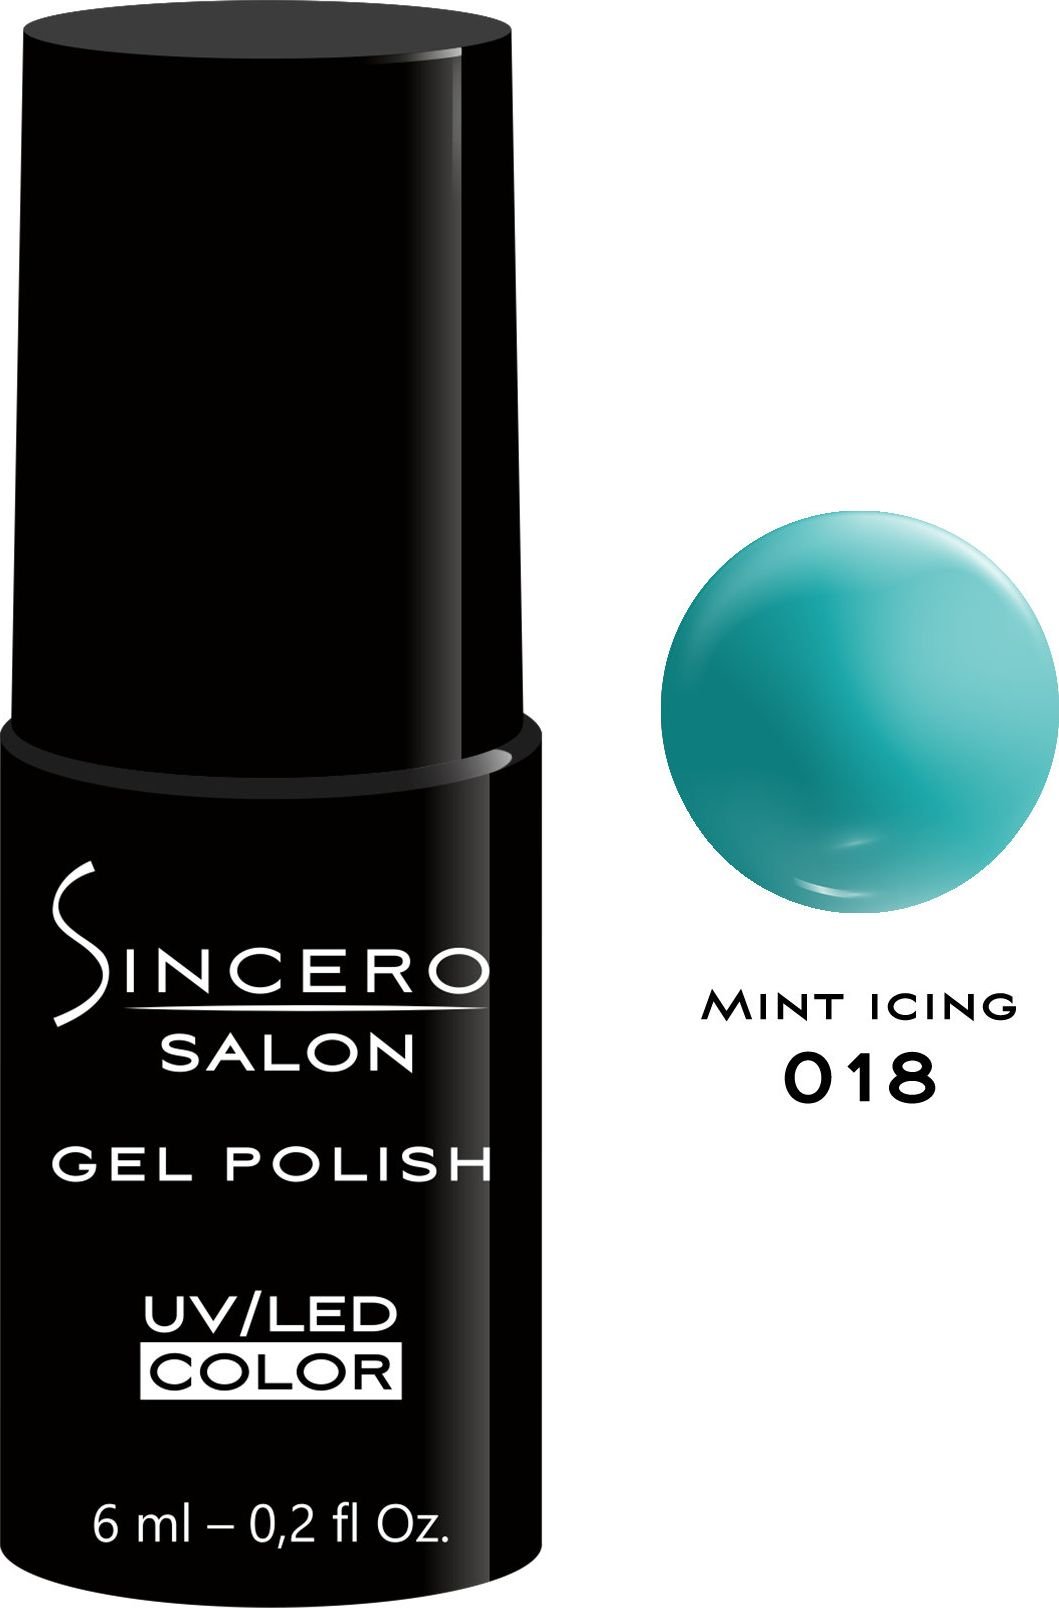 Sincero Salon Gel Polish UV/LED 018 Mint Icing 6ml